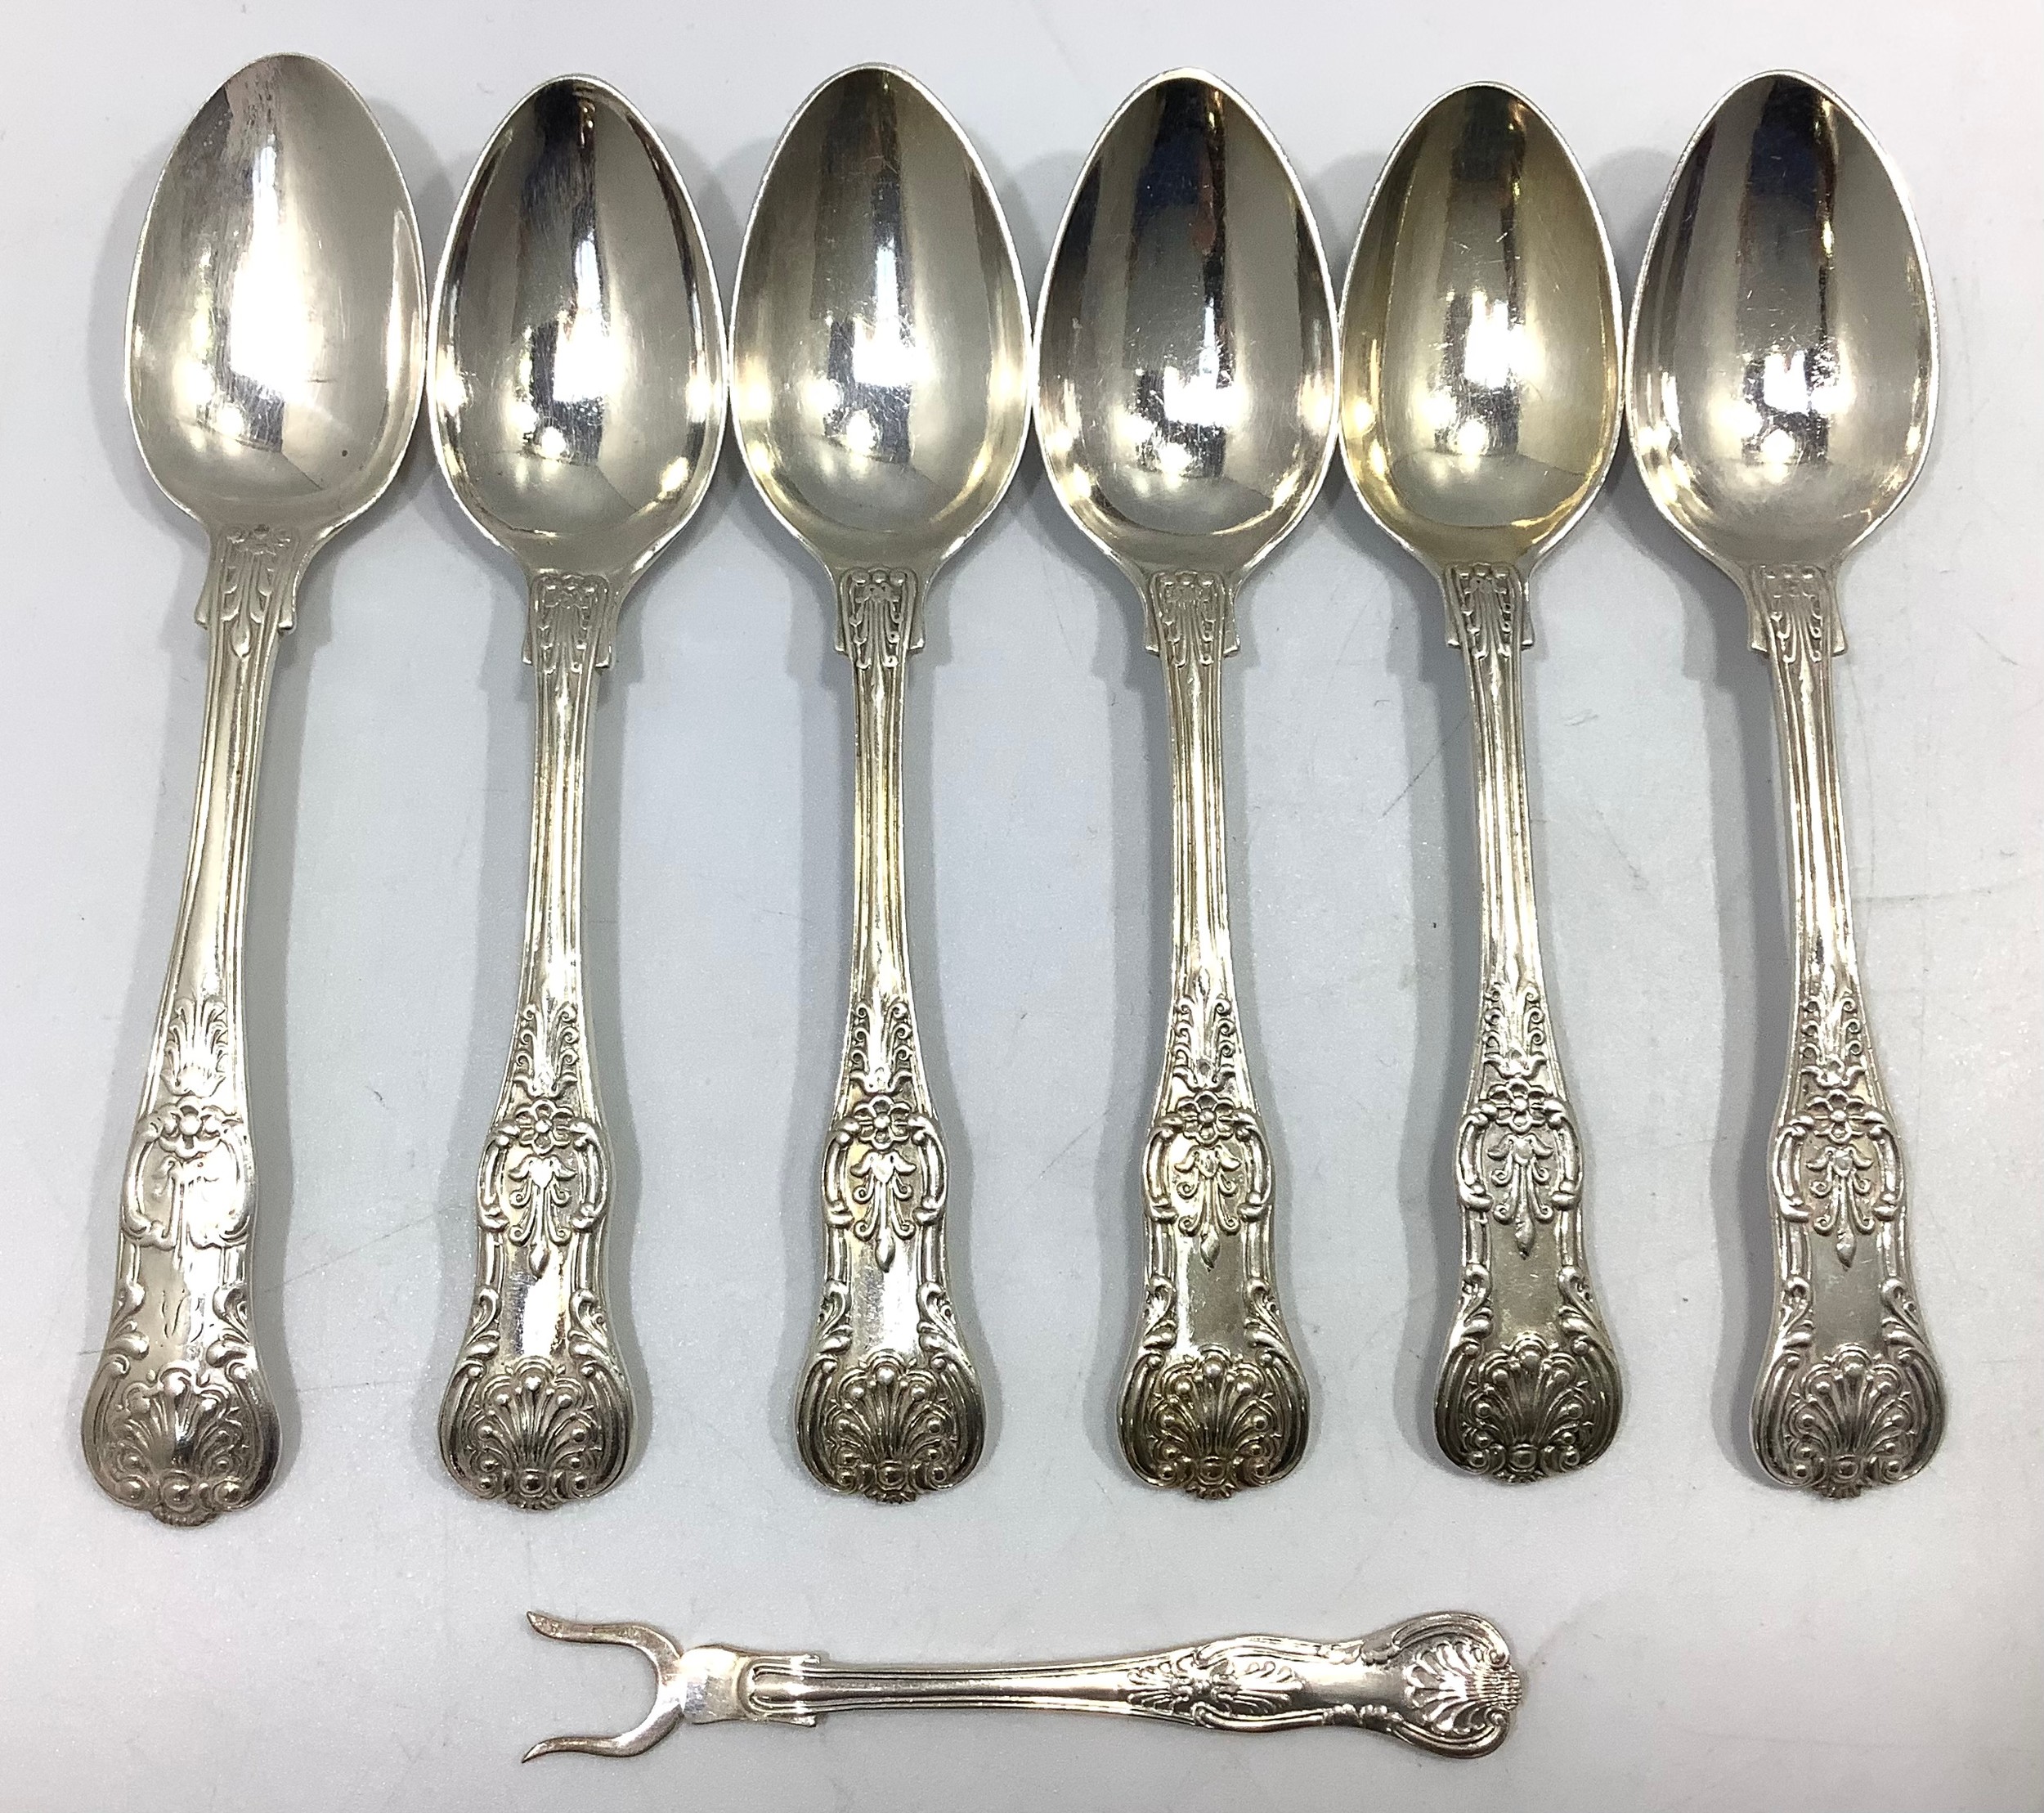 Three Georgian silver Queens pattern teaspoons, London, 1836, maker's mark of Joseph & Albert